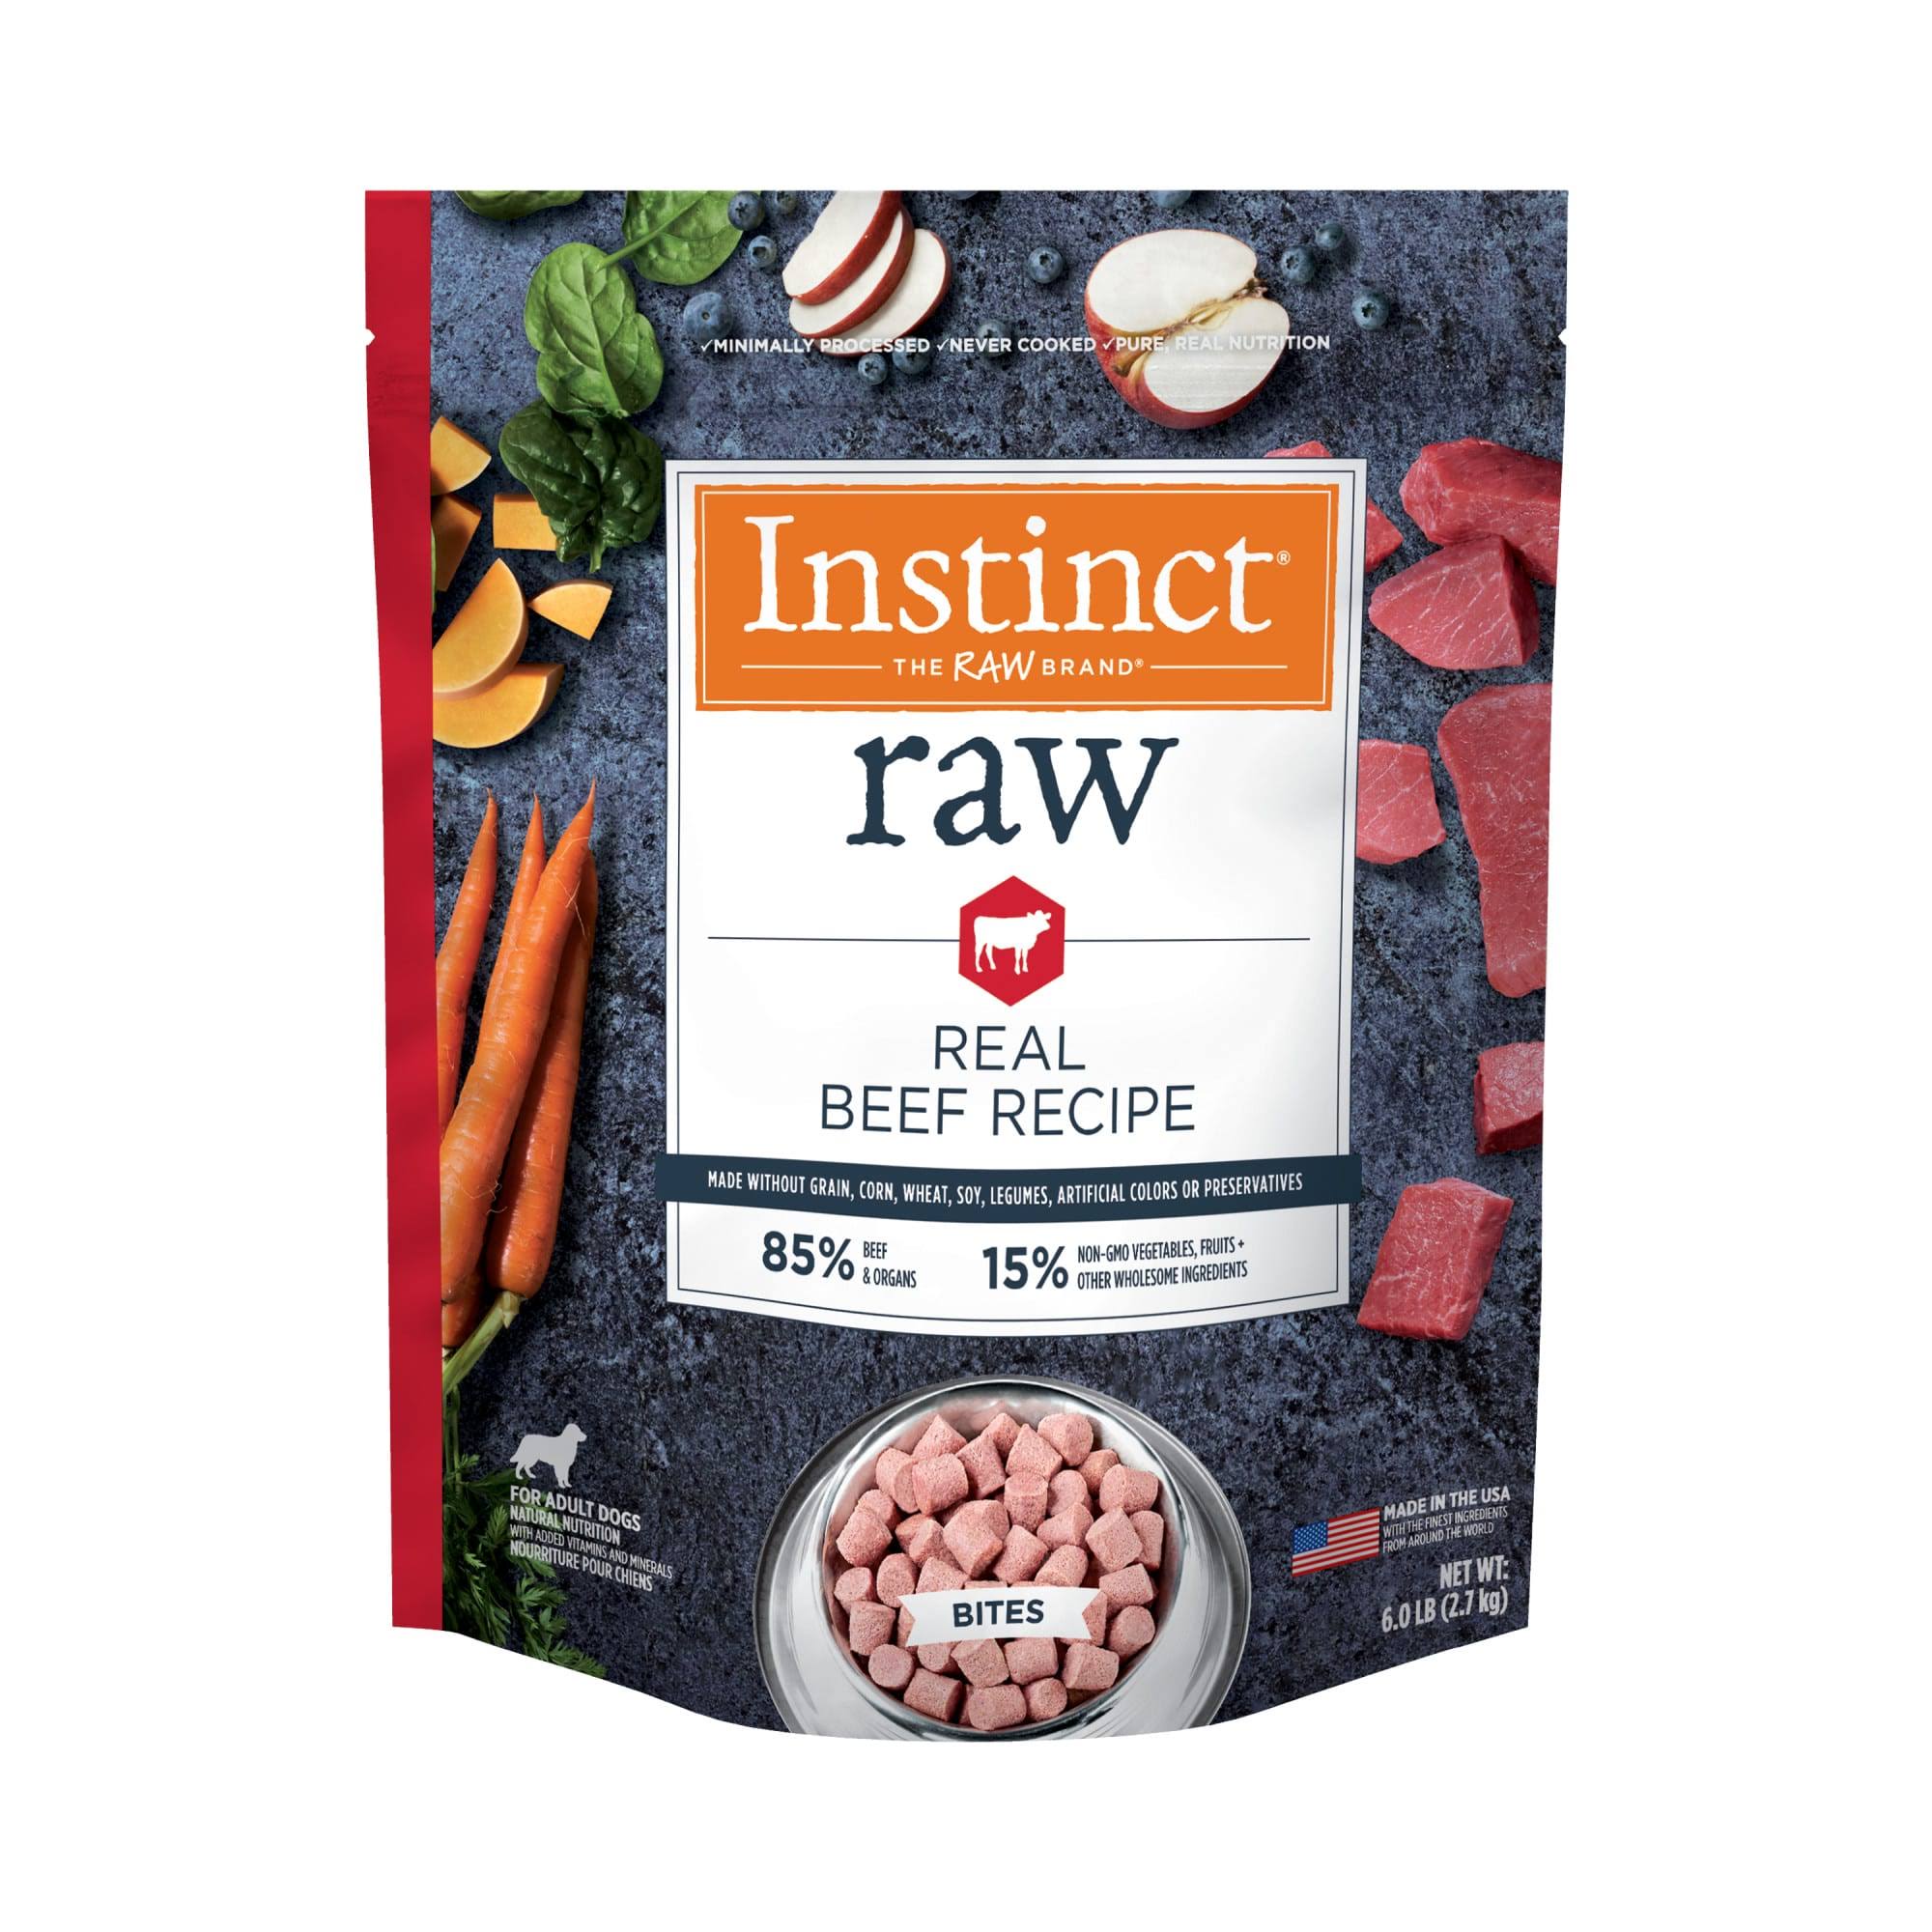 Instinct Frozen Raw Bites Grain Free Real Beef Recipe Dog Food, 6 lbs.